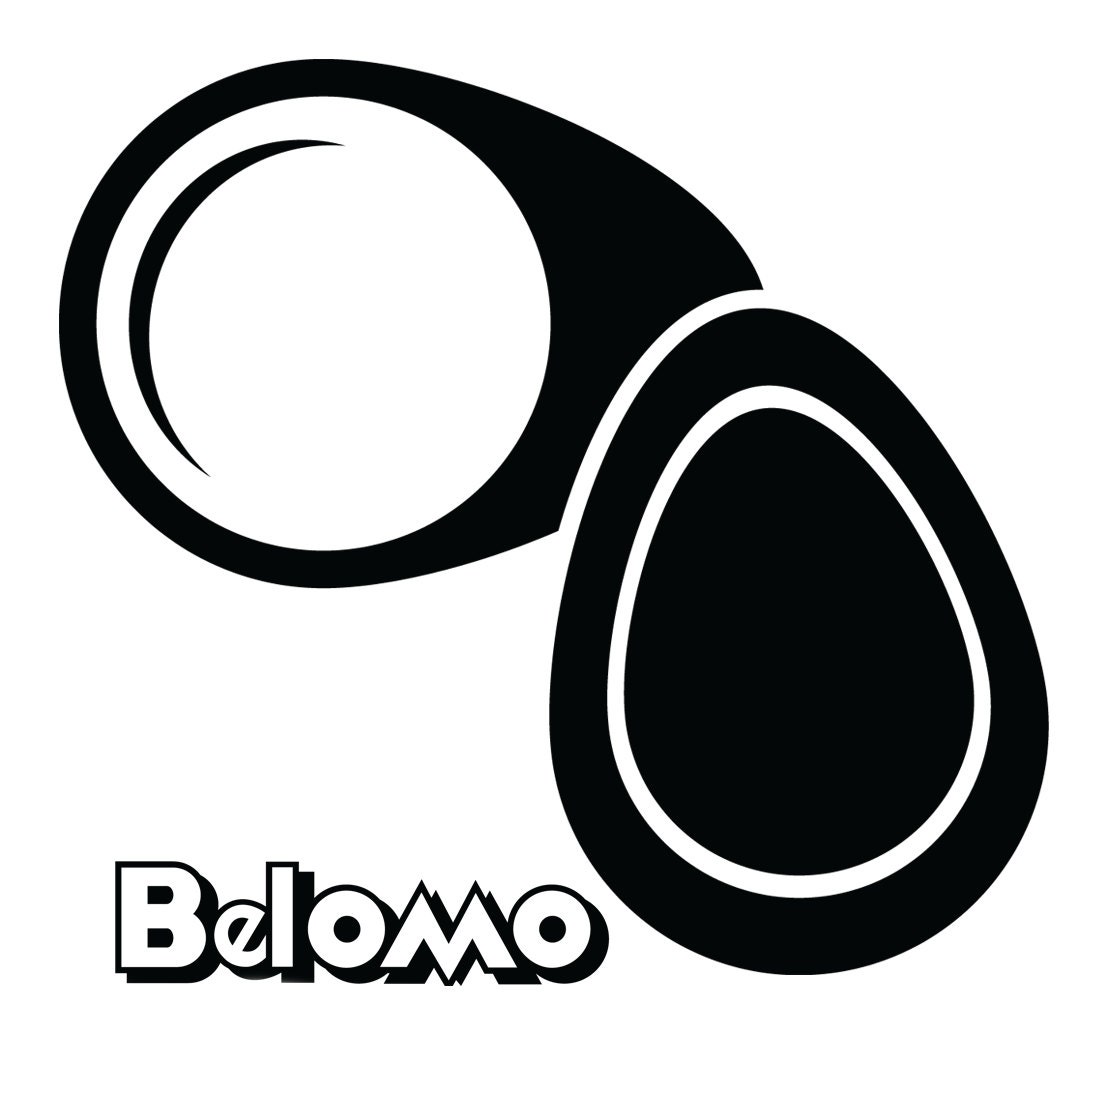 BelOMO 20x Quadruplet Loupe Magnifier - the most powerful handheld magnifier